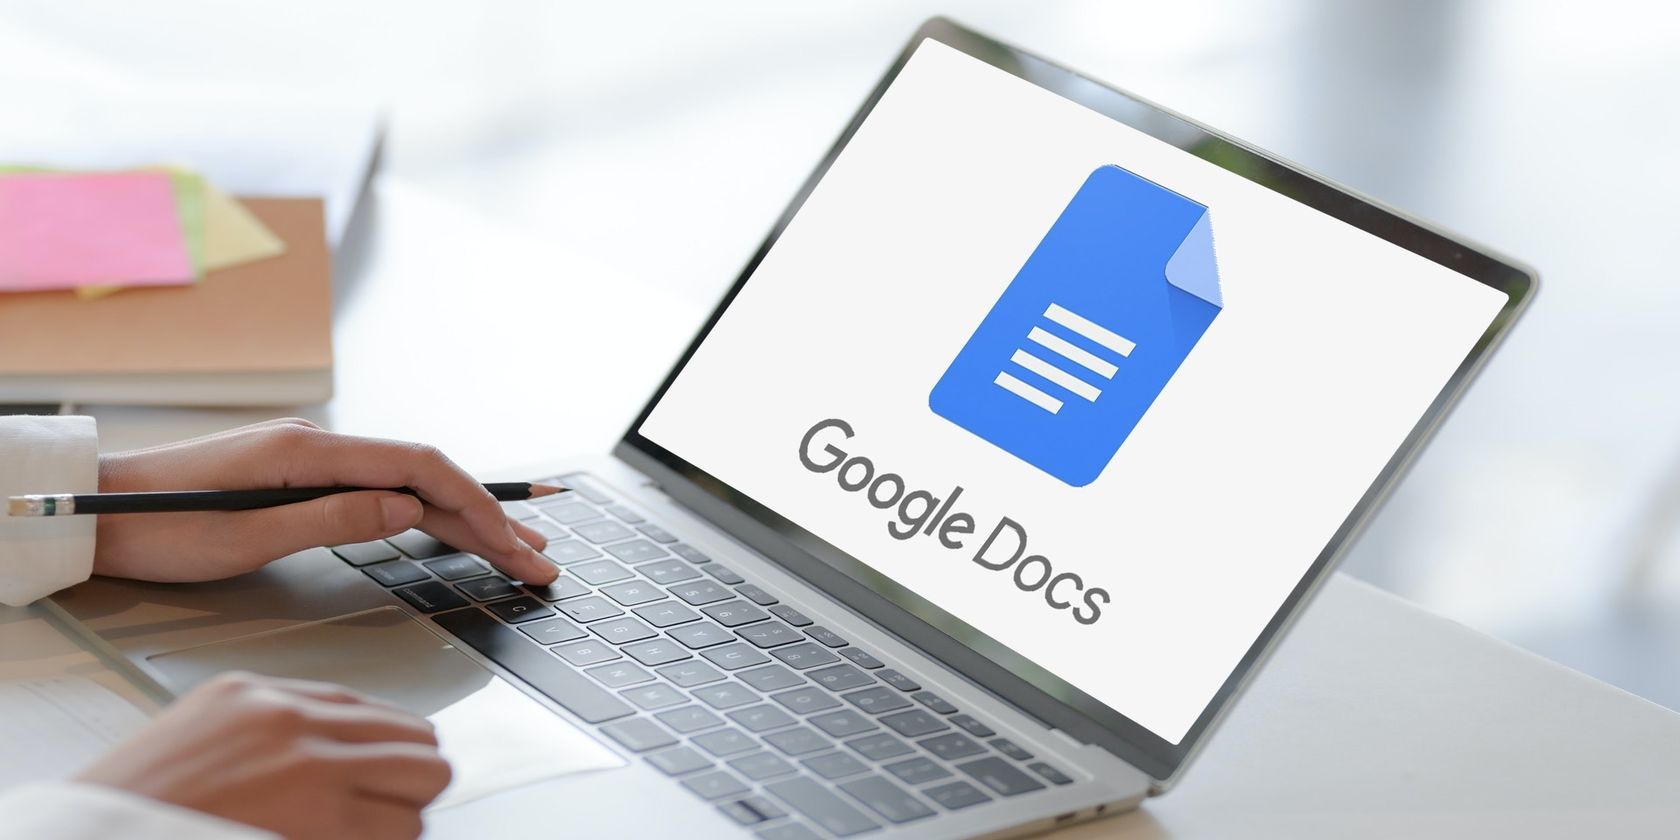 MacBook with Google Docs logo